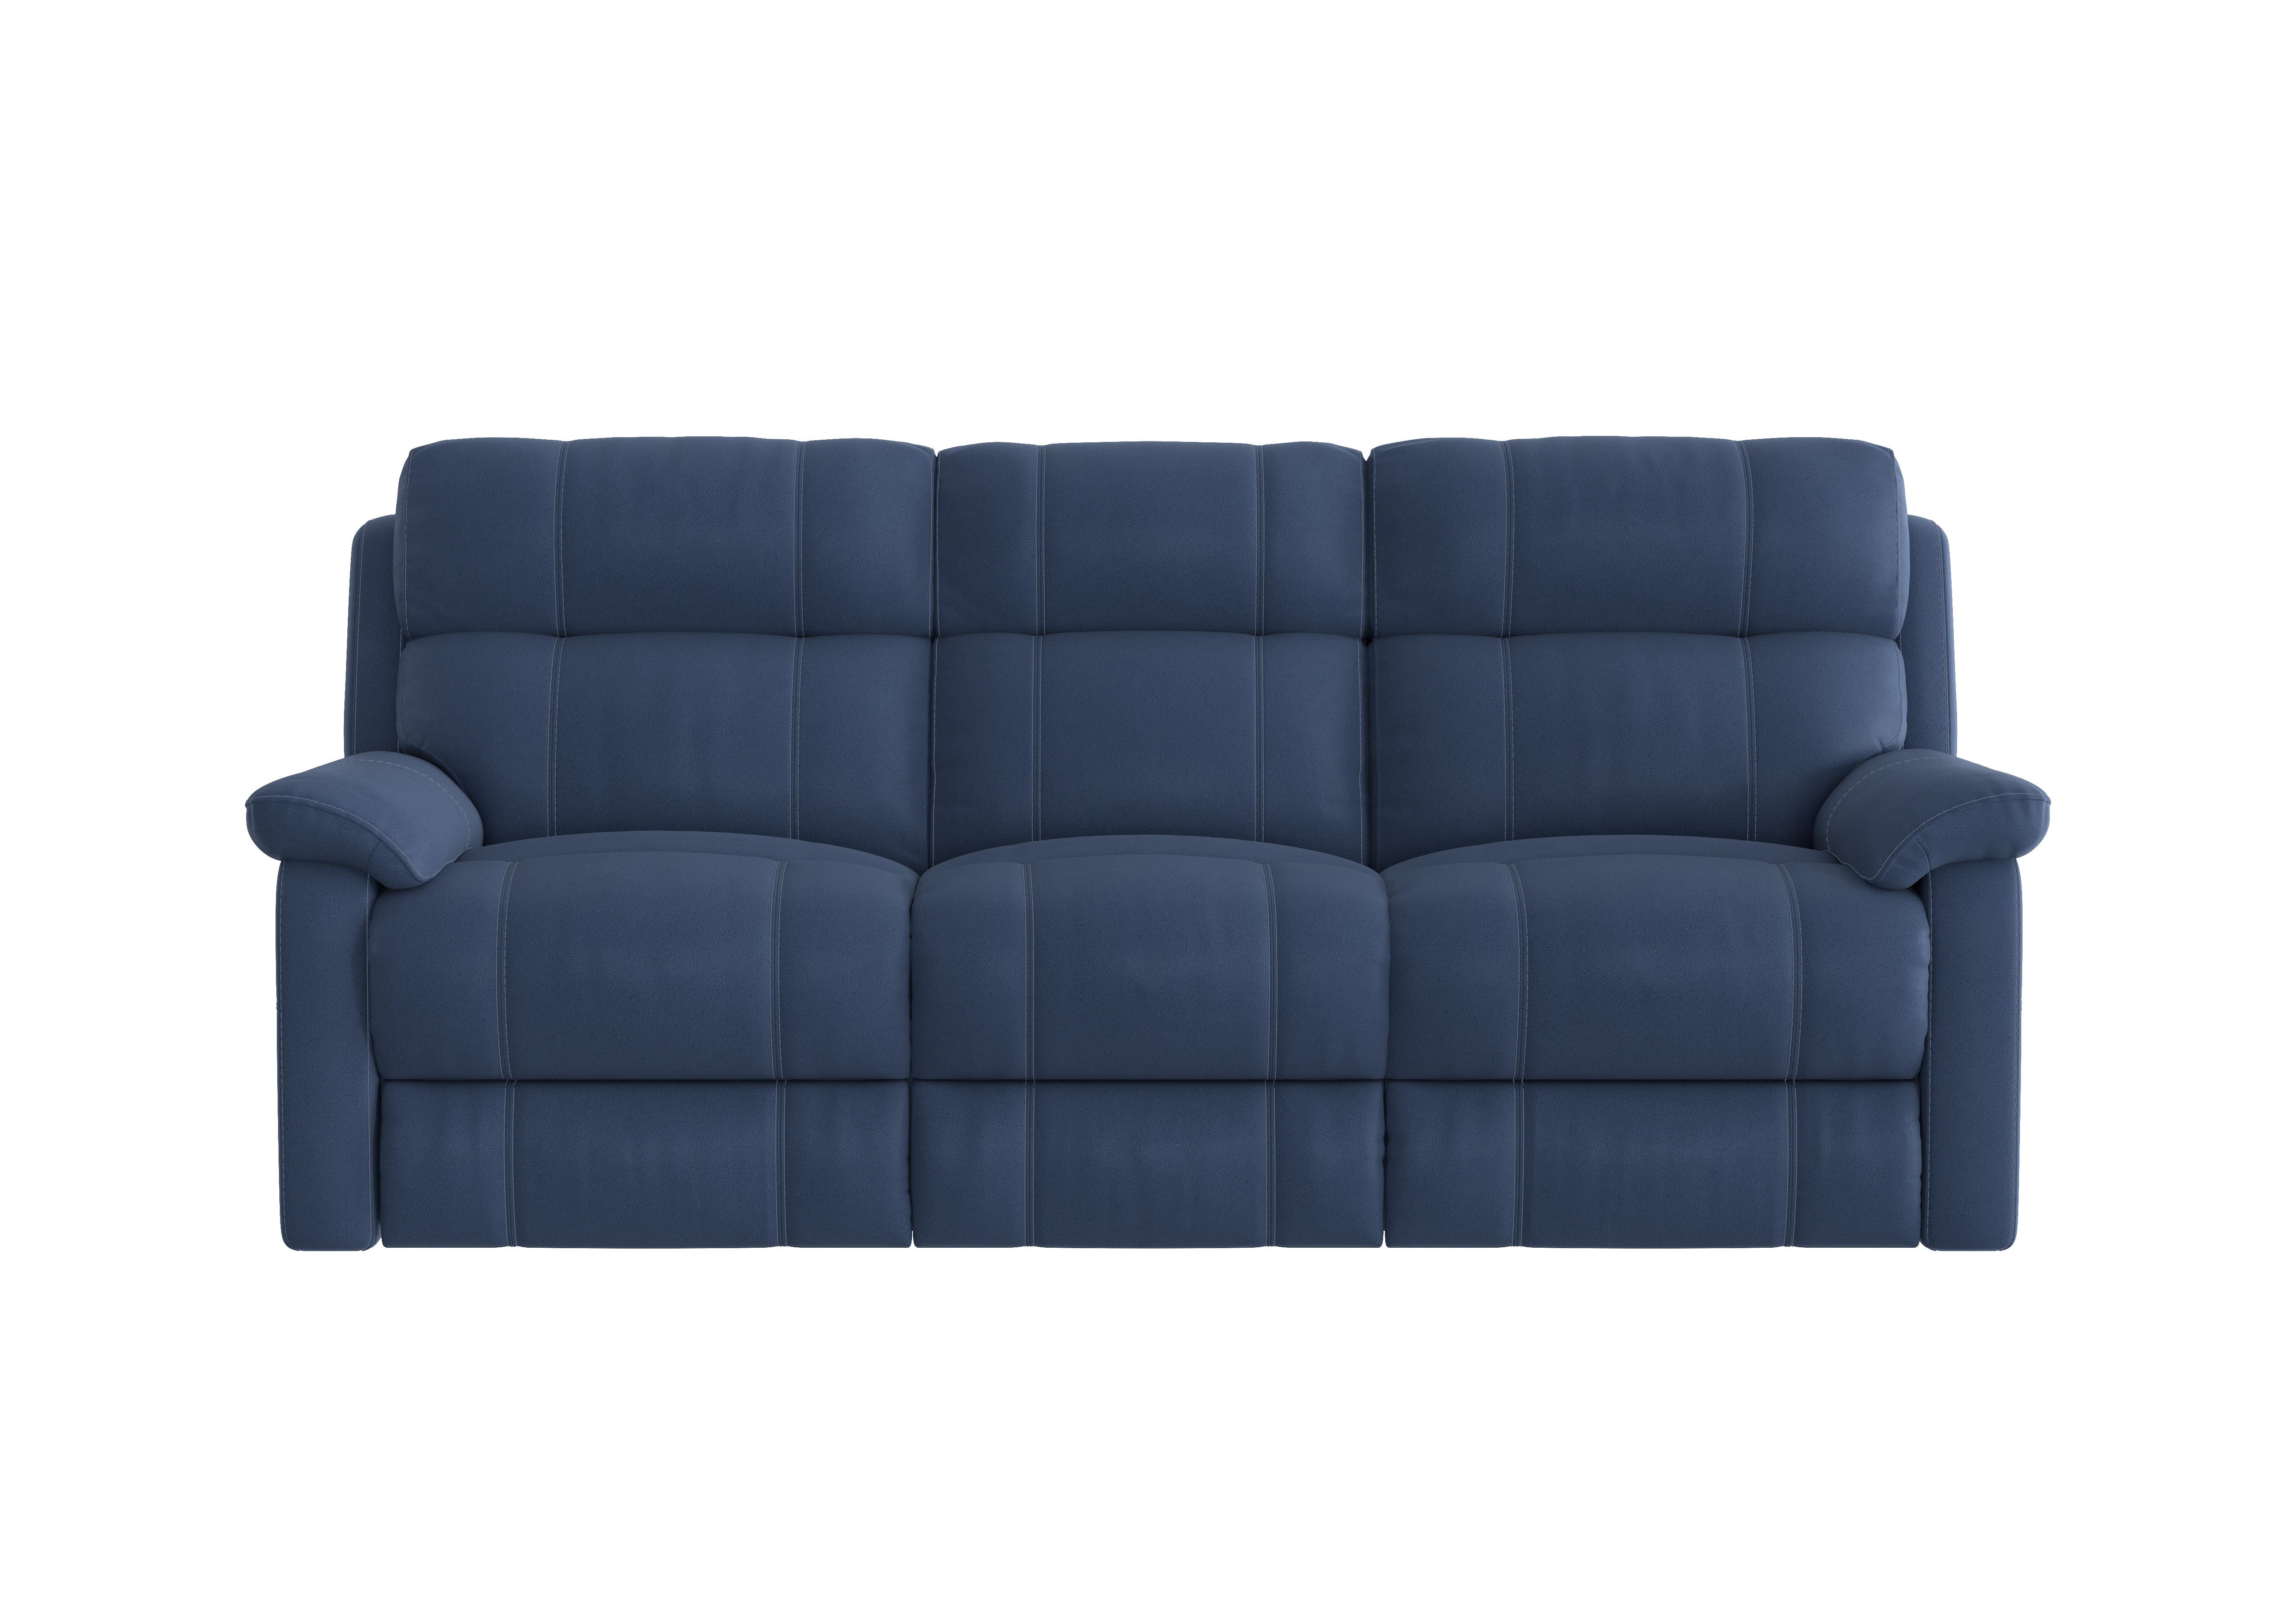 Relax Station Komodo 3 Seater Fabric Recliner Sofa in Bfa-Blj-R10 Blue on Furniture Village